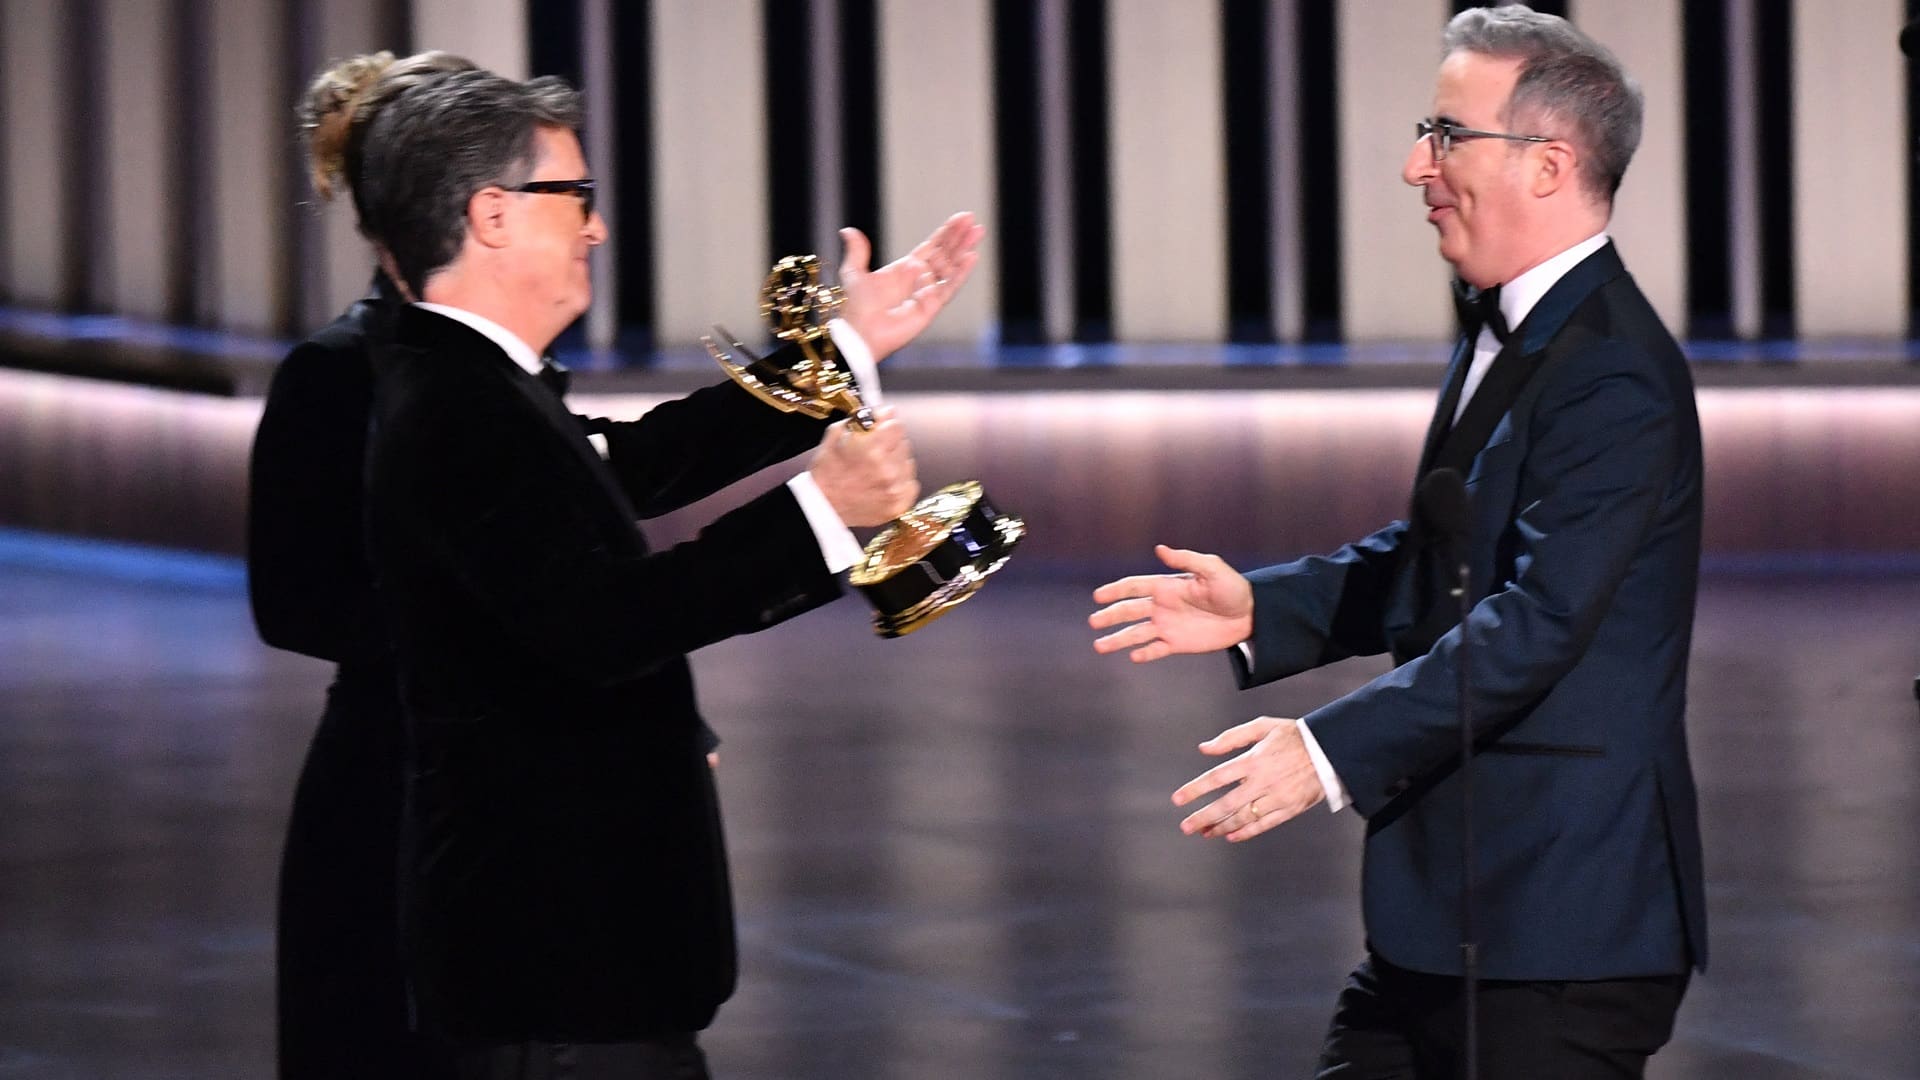 Stephen Colbert (L) presenting the Emmy Award to John Oliver (R).